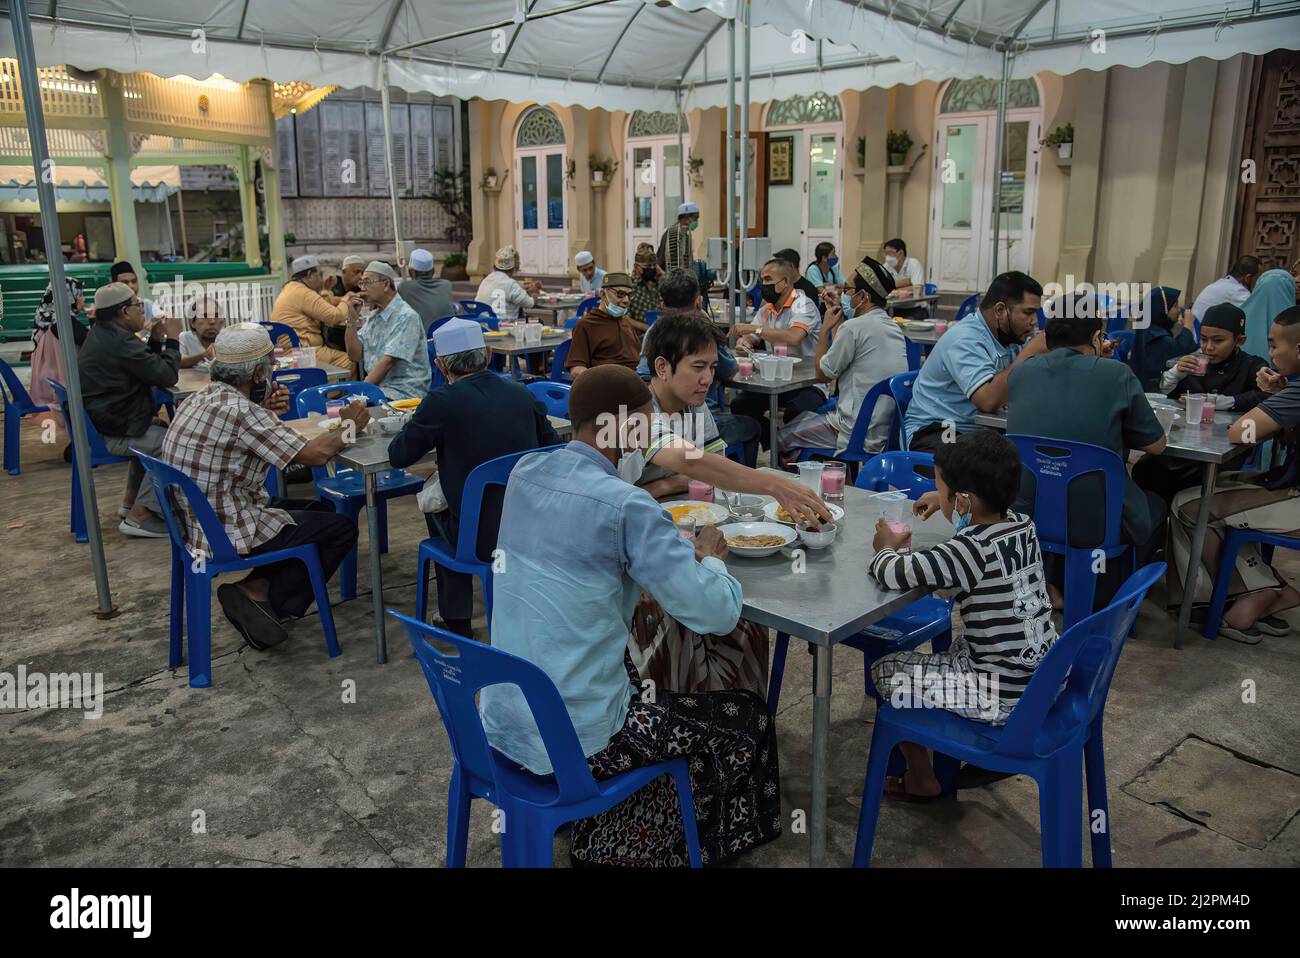 Ramadan meal muslims -Fotos und -Bildmaterial in hoher Auflösung - Seite 2  - Alamy